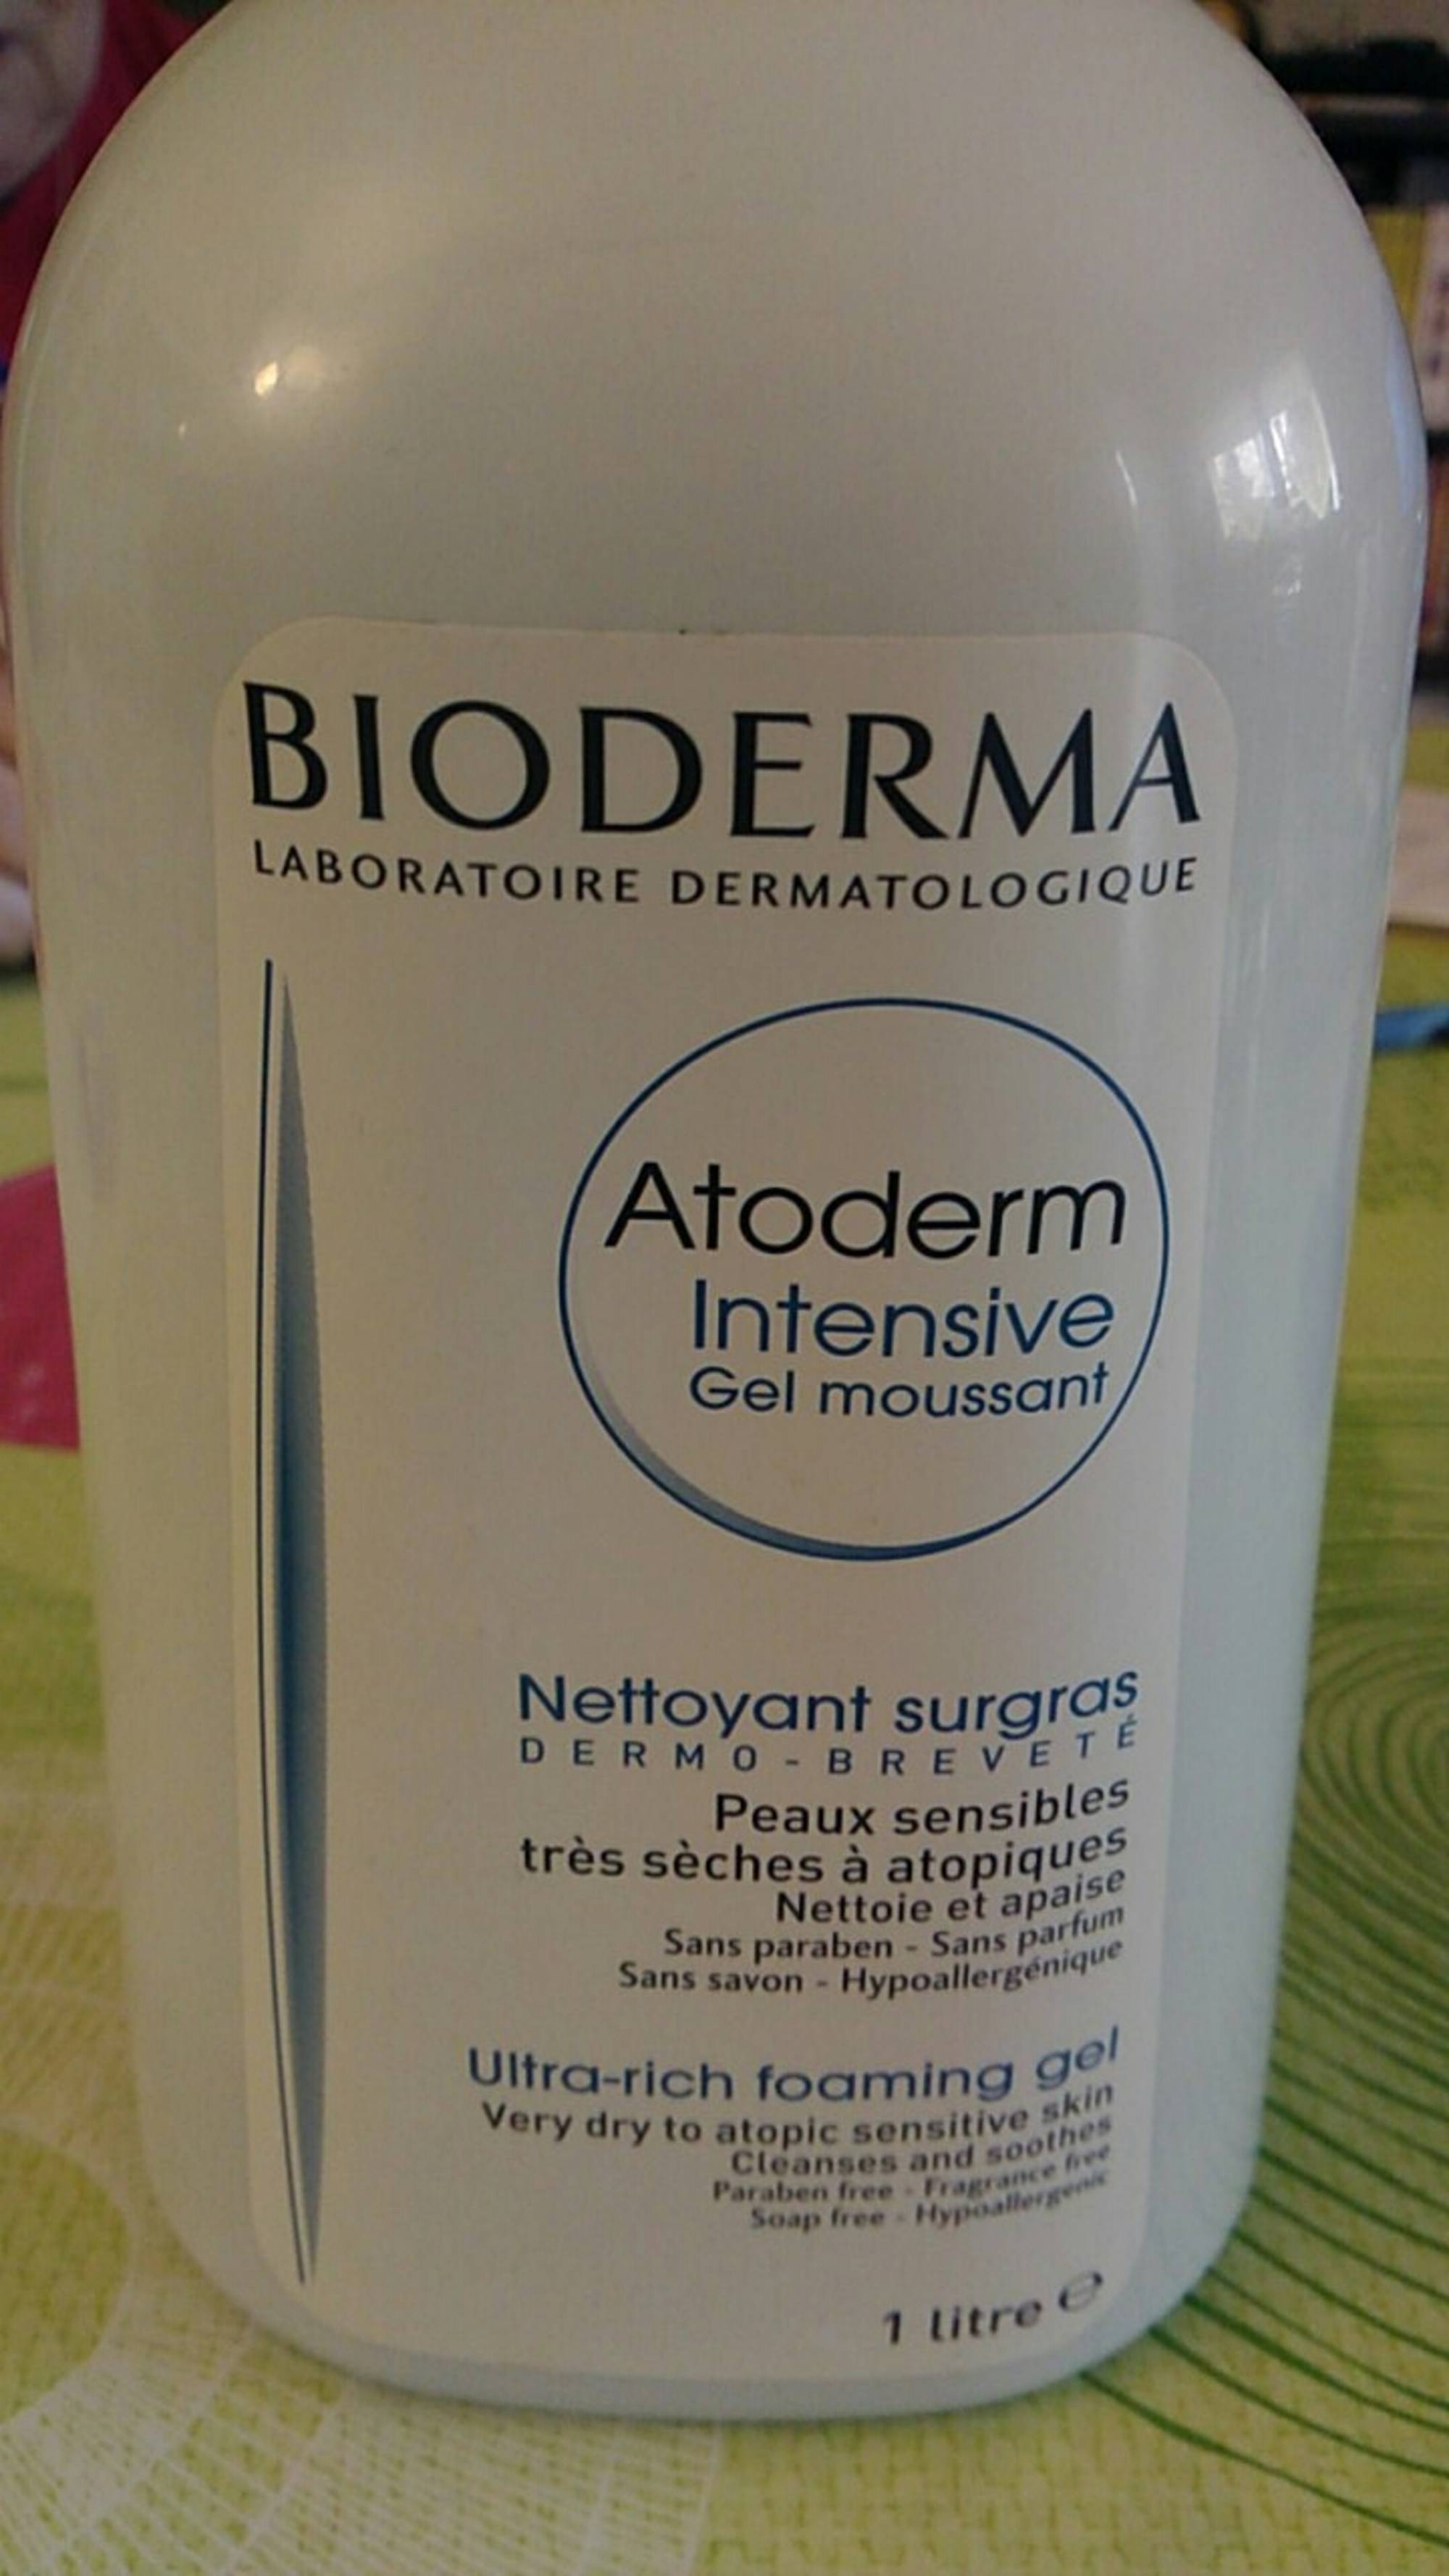 BIODERMA - Atoderm - Intensive gel moussant nettoyant surgras